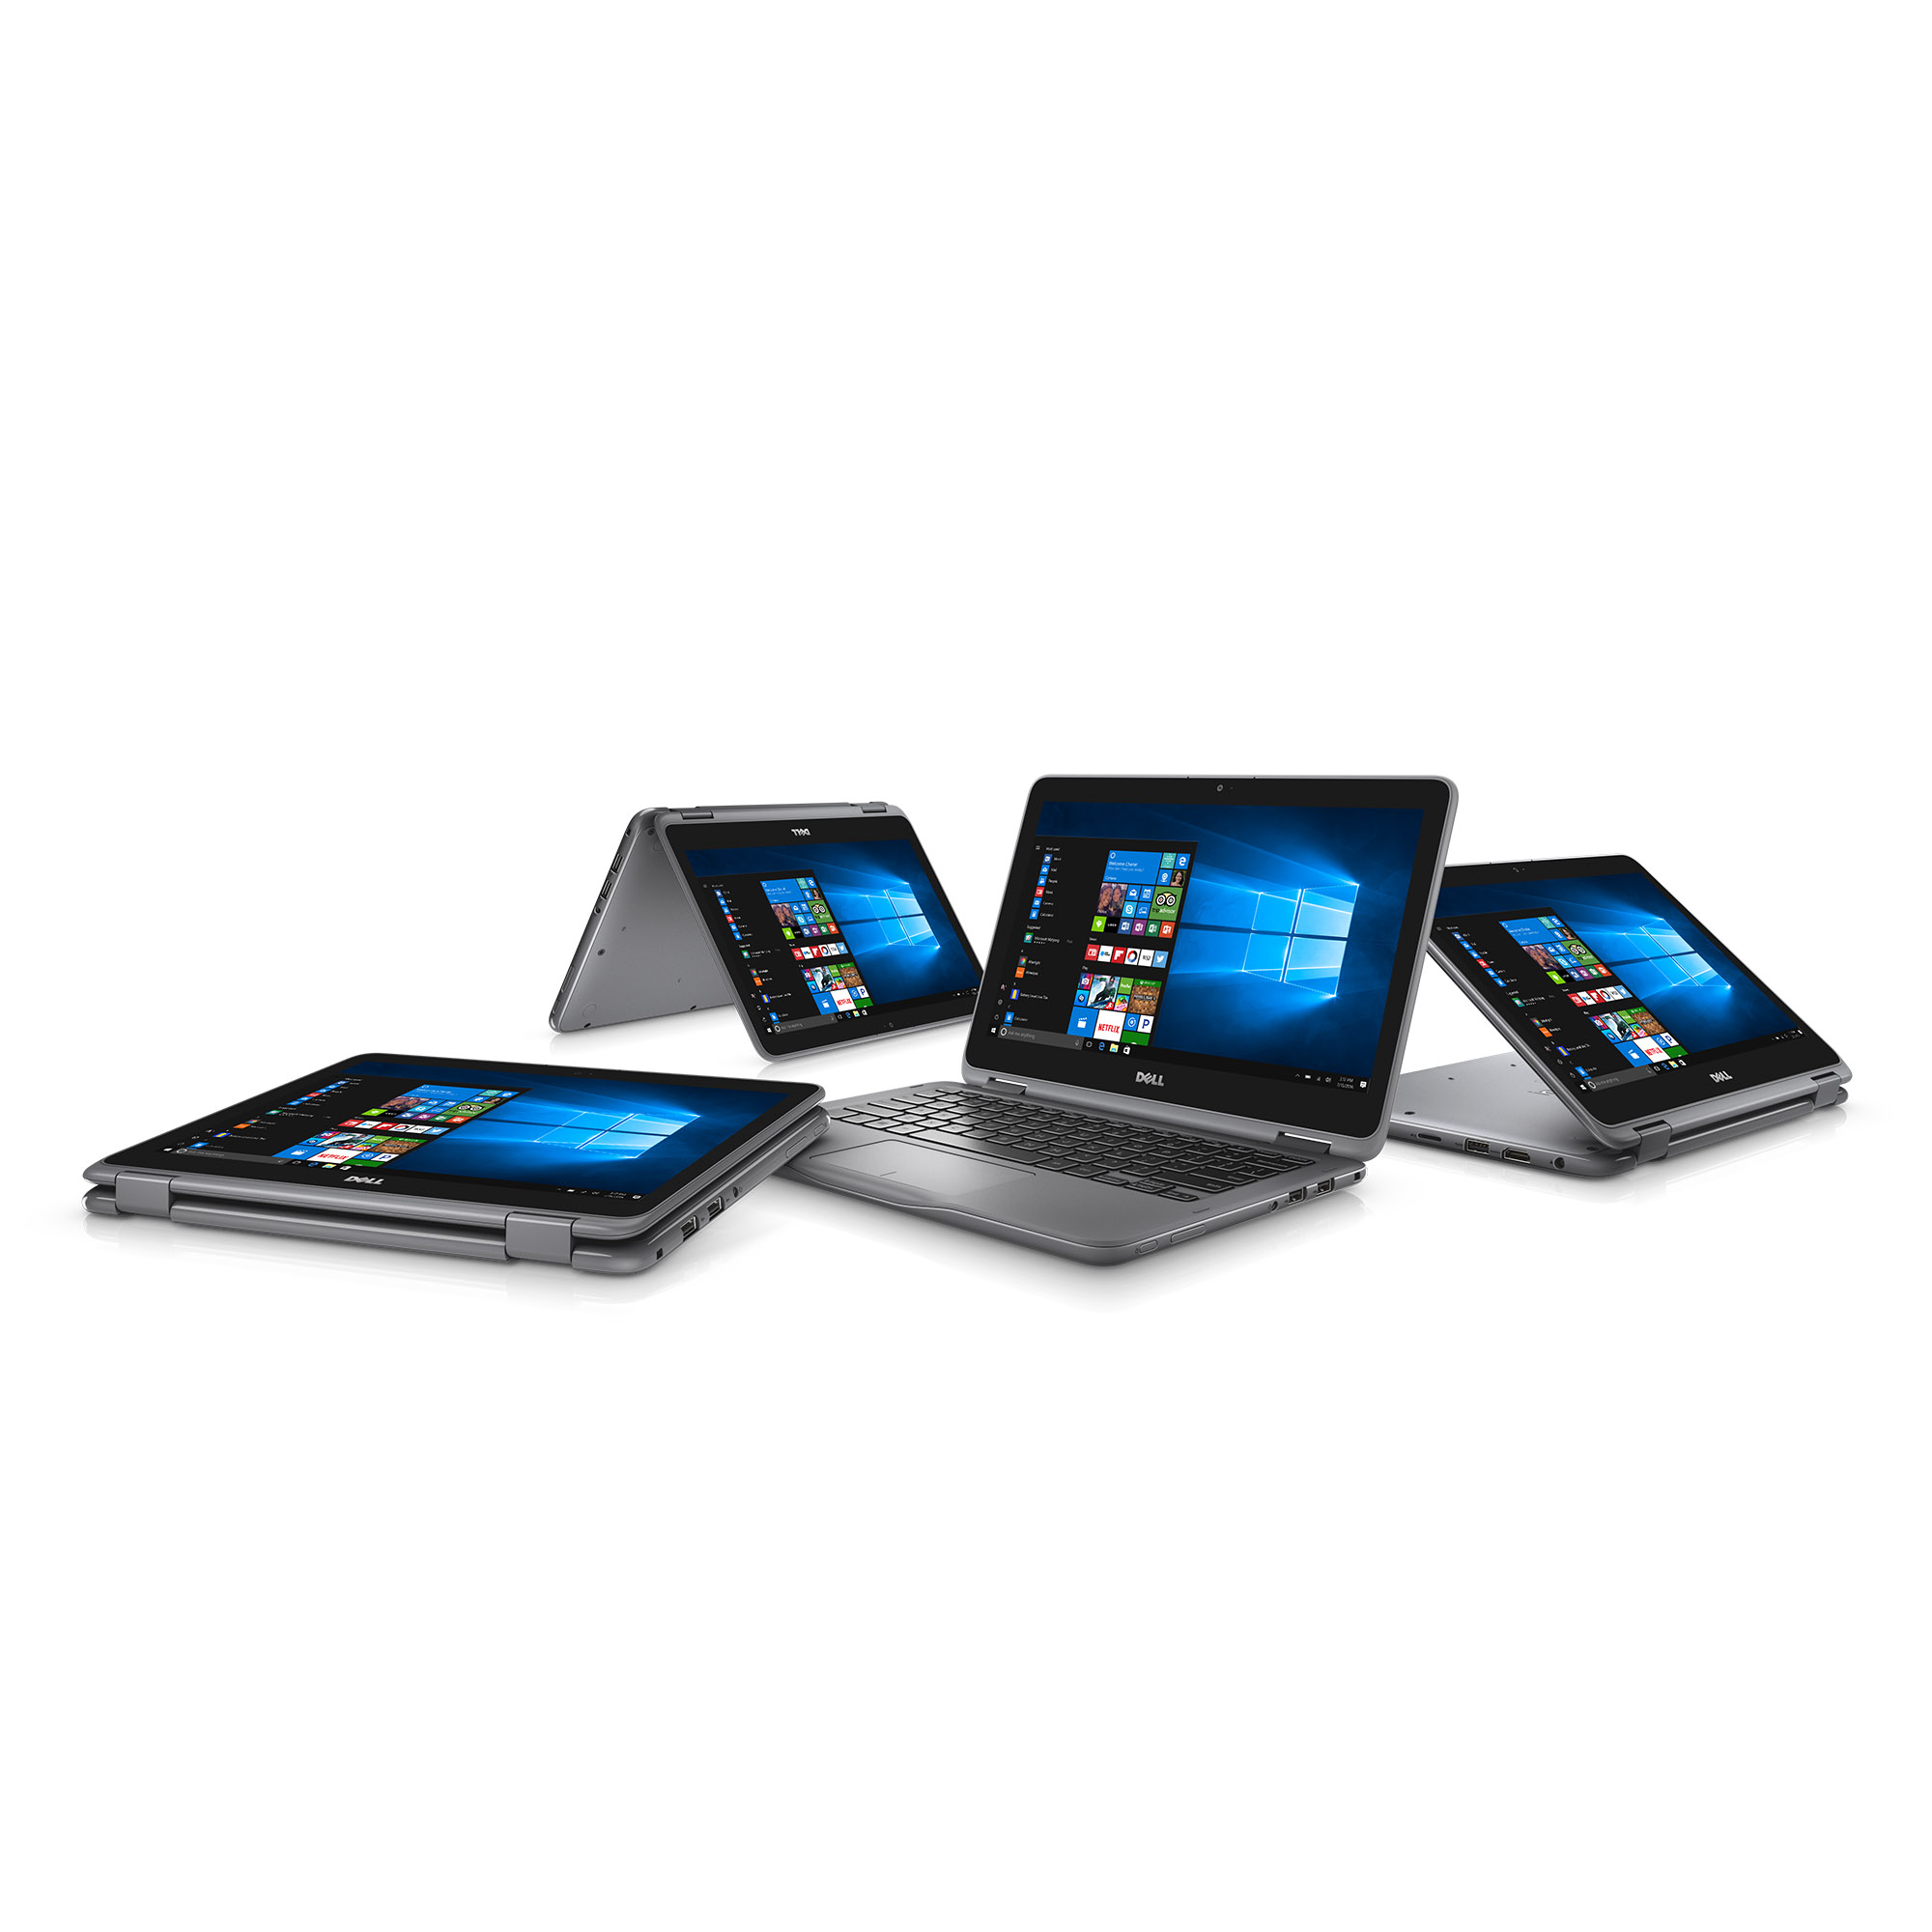 Dell Inspiron 11 3000 11.6" HD 2-in-1 Laptop, AMD A6-9220e, 4GB 2400MHz DDR4, 32GB eMMC Storage, Windows 10 - Grey - I3185A760GRY - image 5 of 7